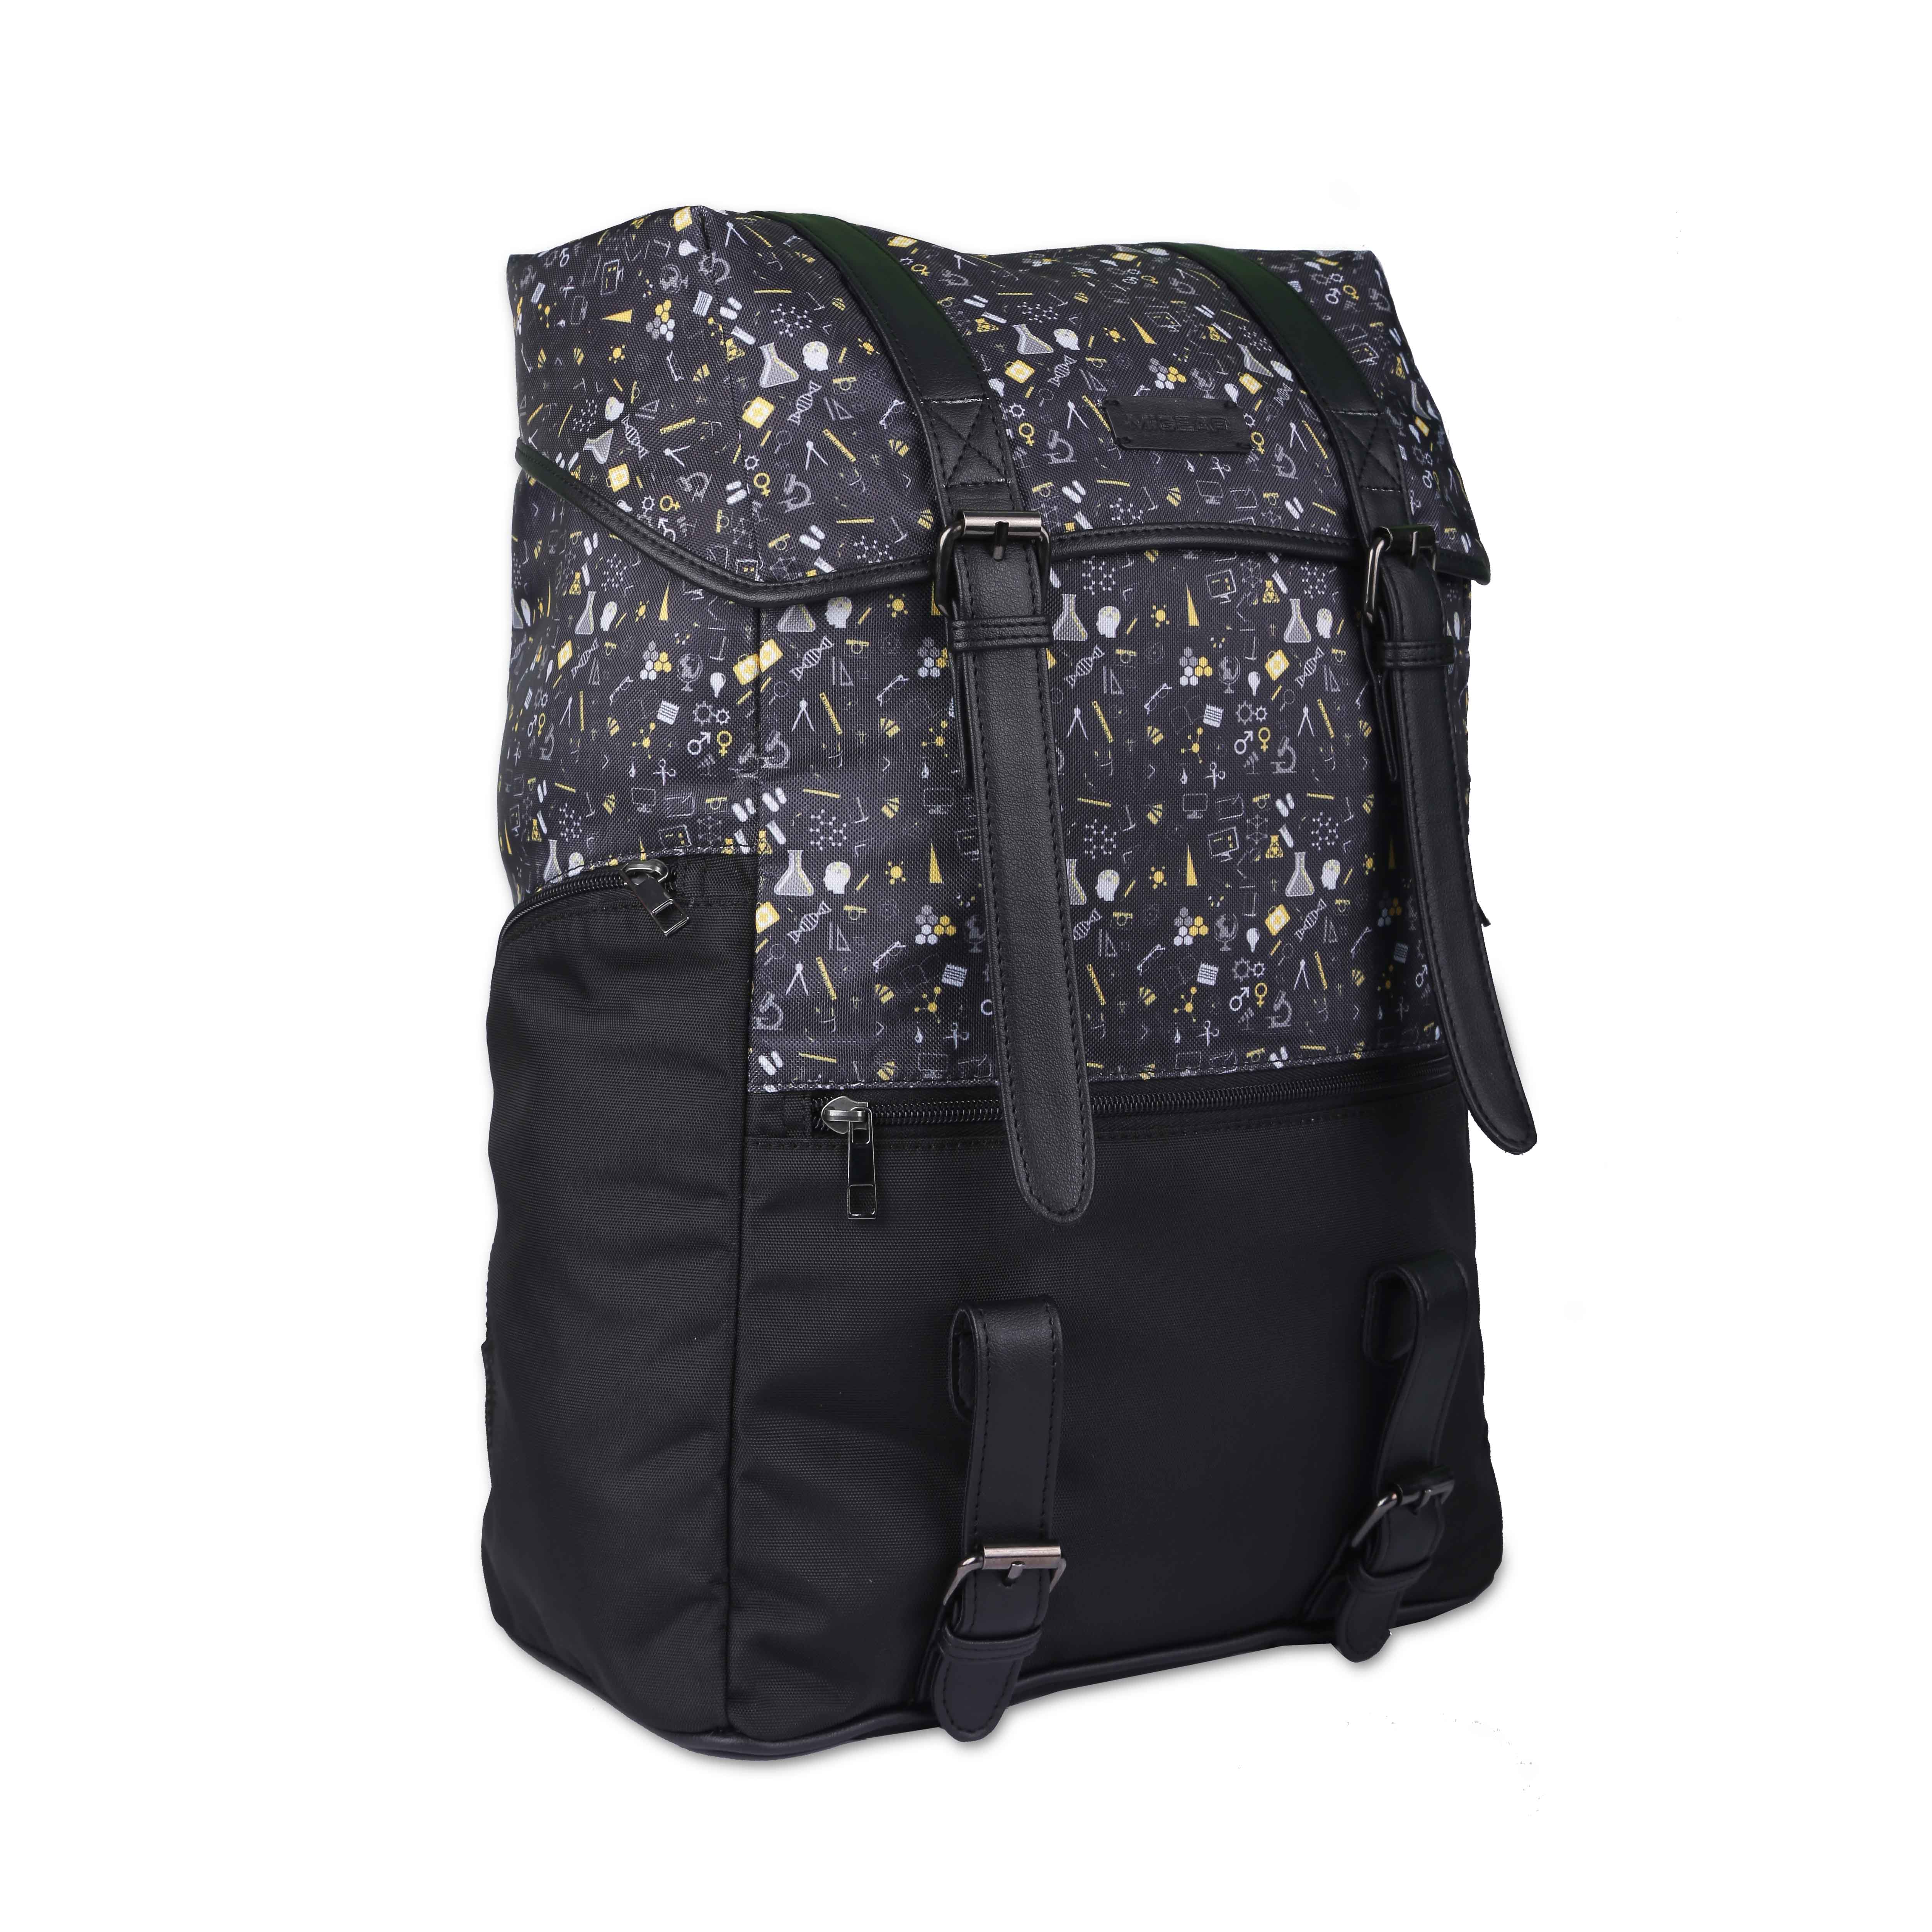 Celestial Buckle Backpack